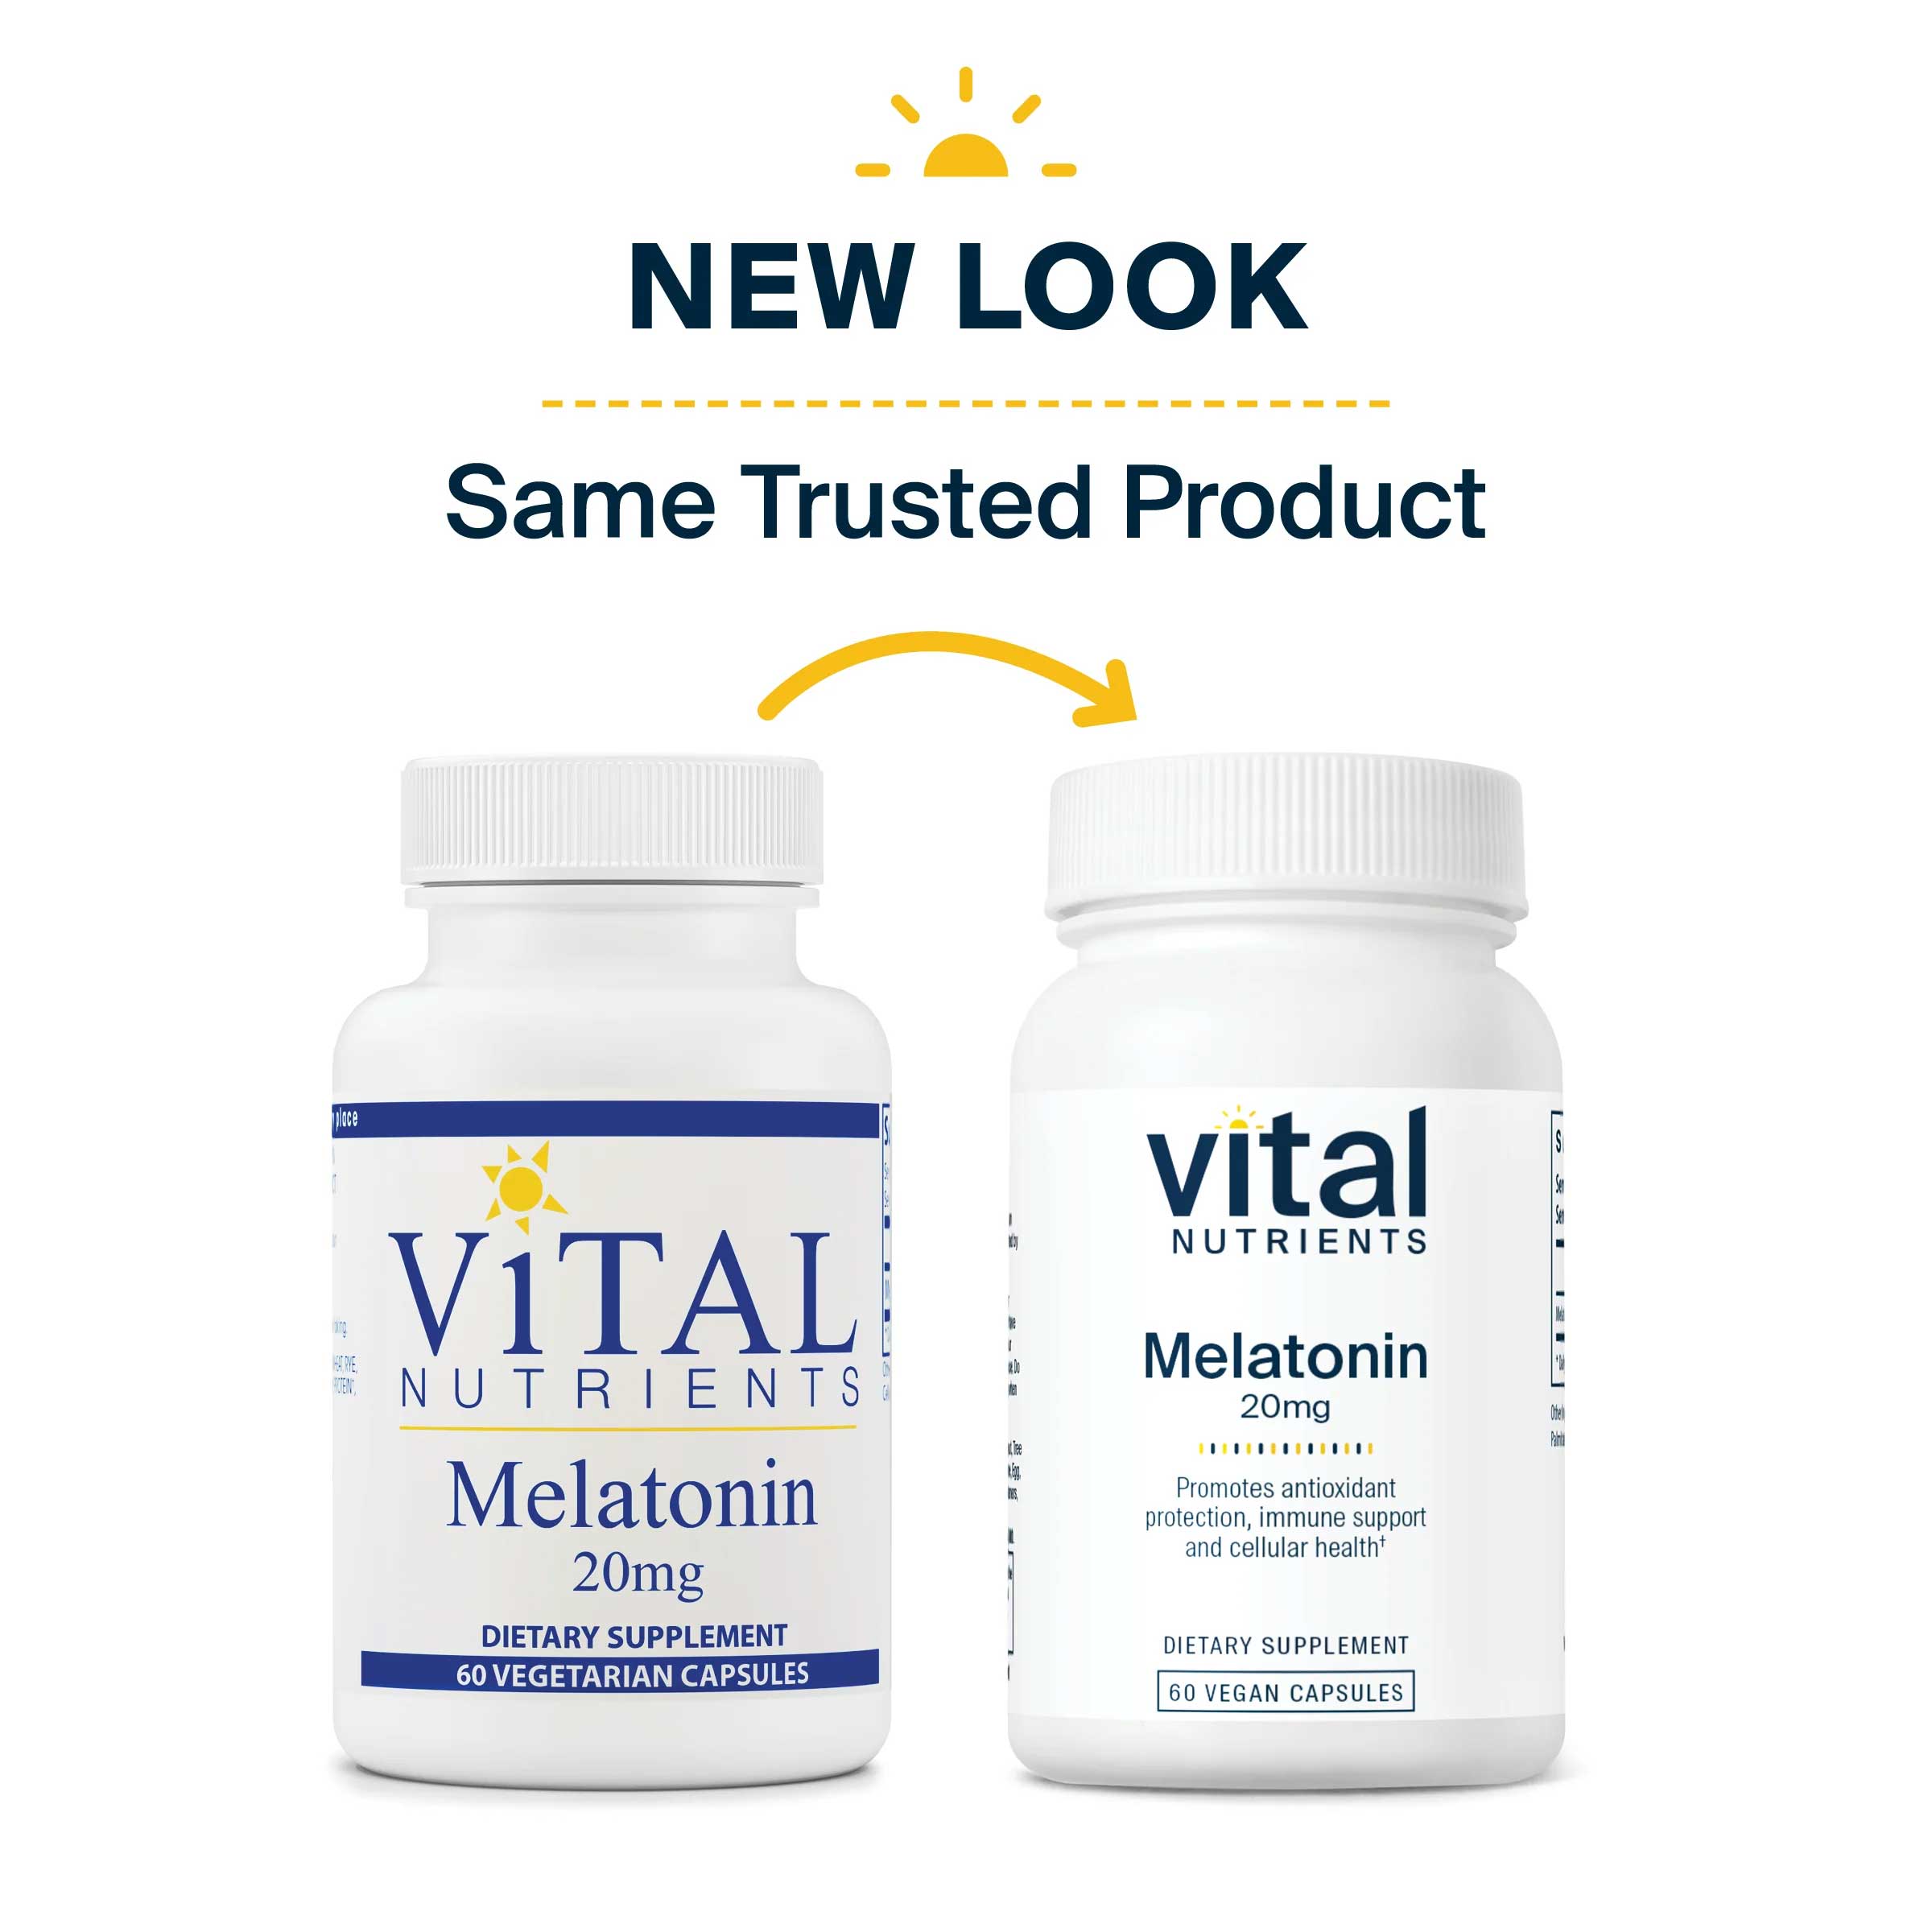 Vital Nutrients Melatonin 20mg New Look